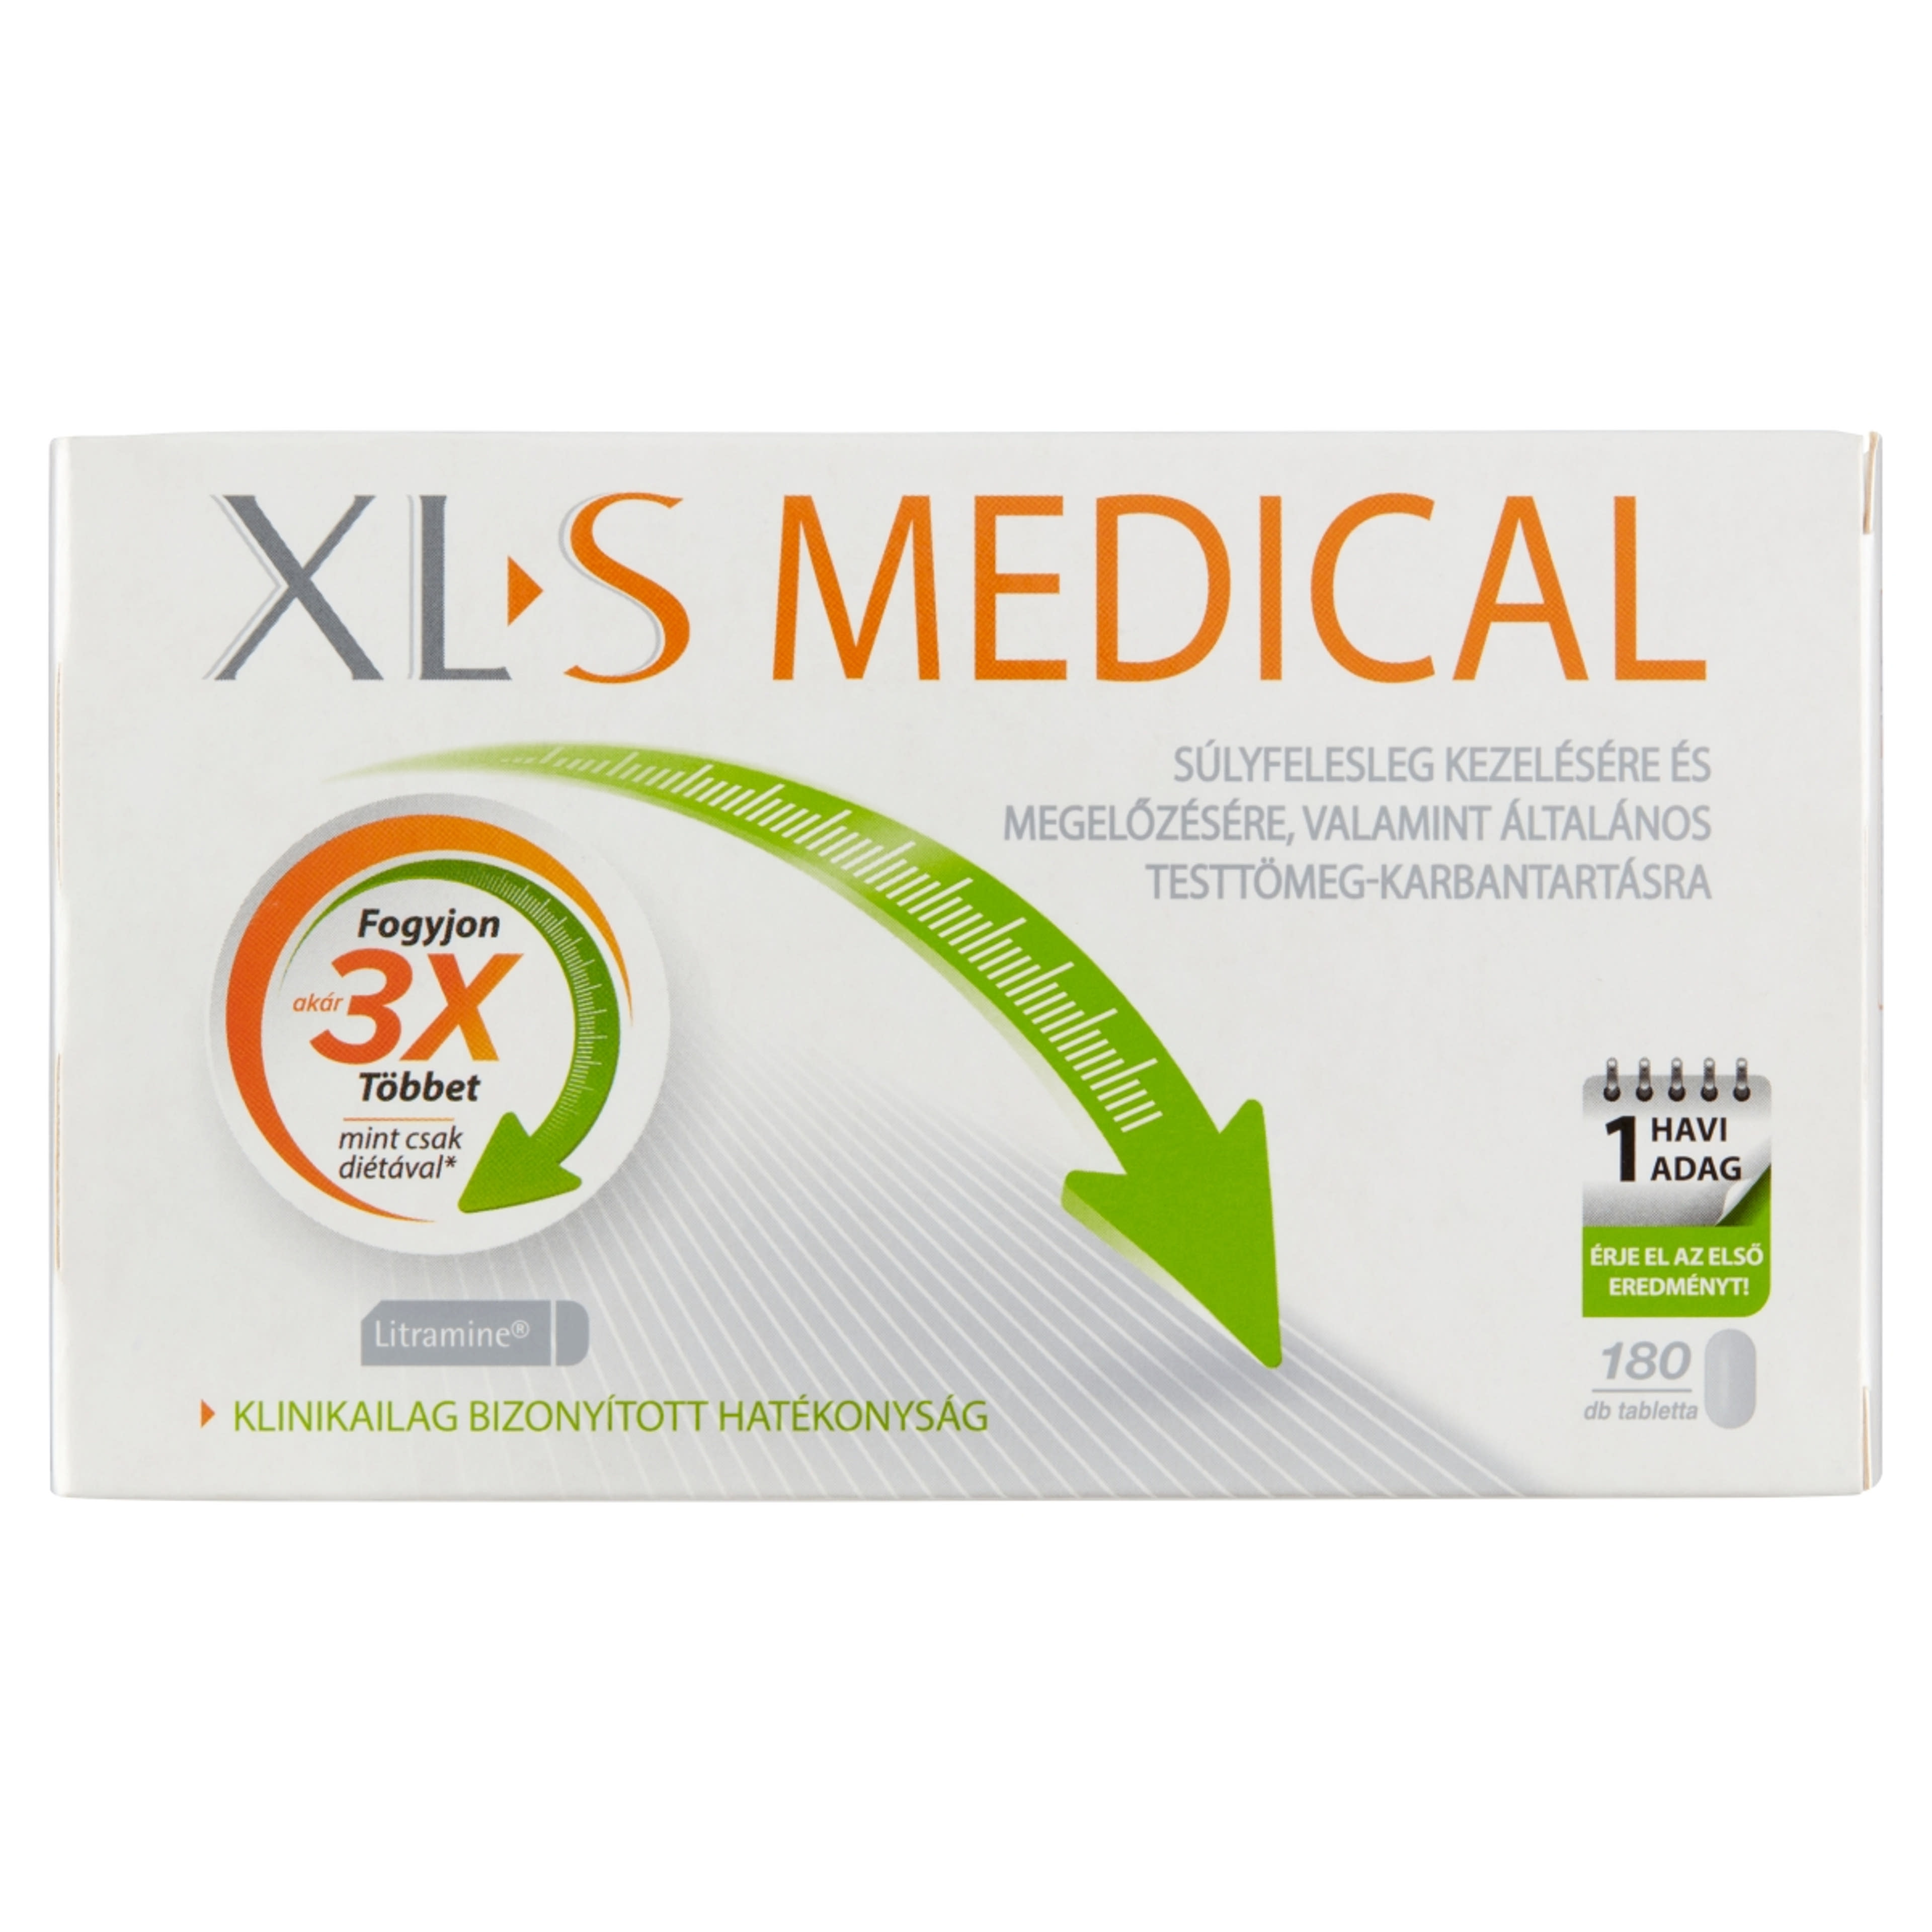 XLS Medical Tabletta - 180 db